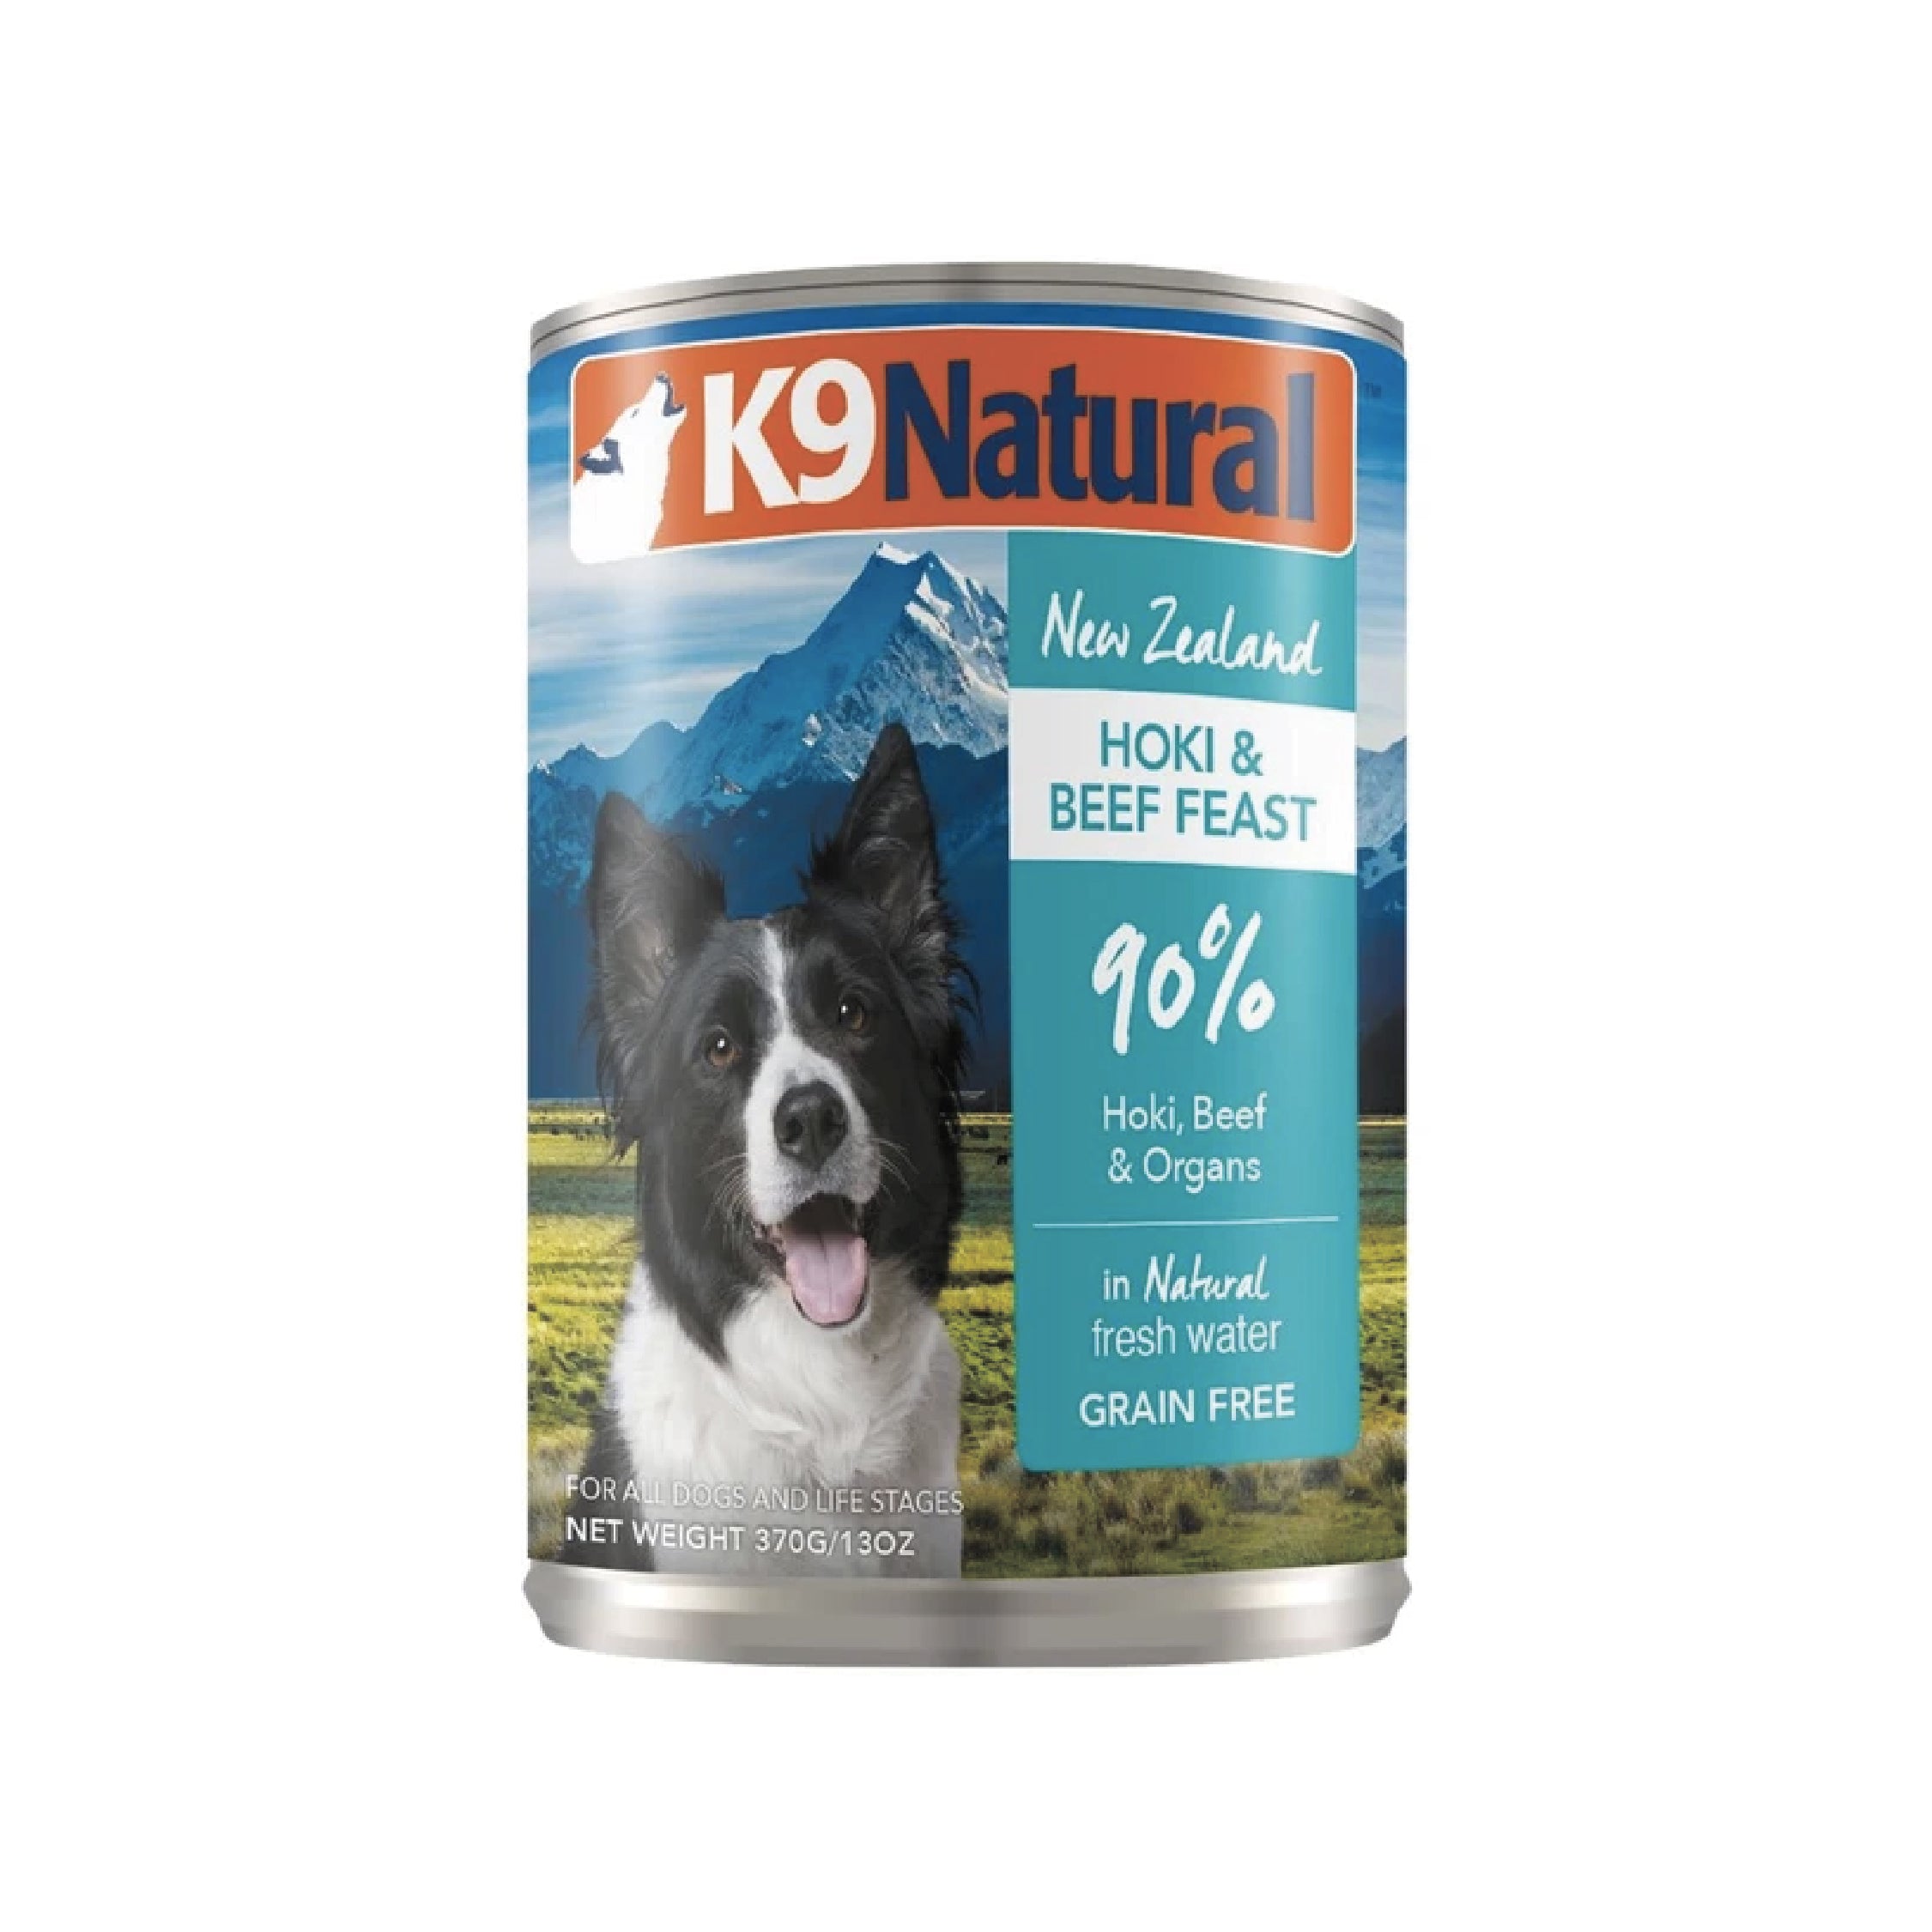 K9 Natural Hoki & Beef Feast Grain-Free Canned Dog Food